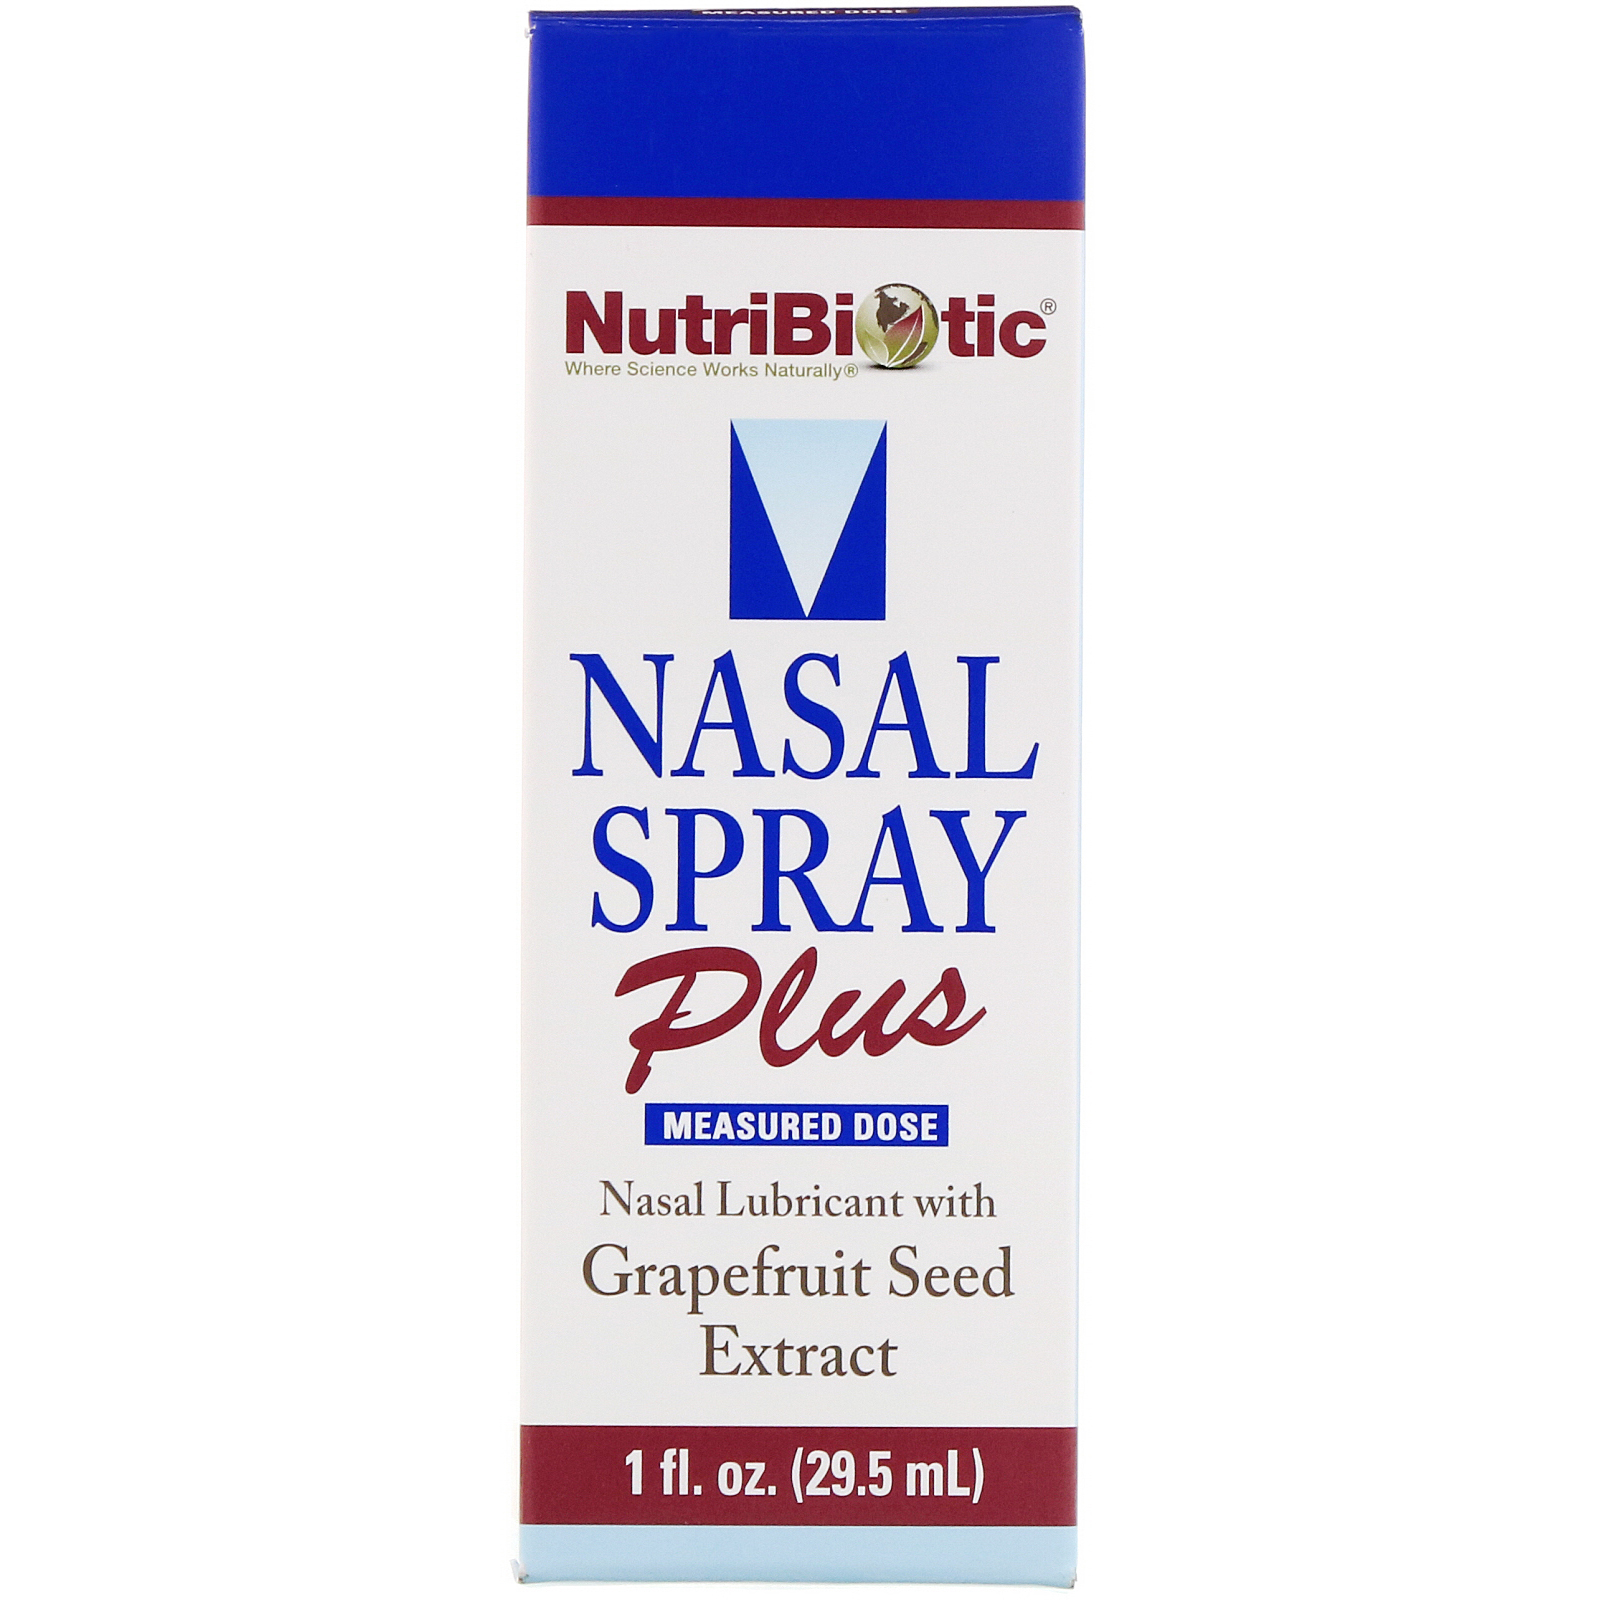 NutriBiotic, "Спрей для носа плюс", спрей для носа с экстрактом семян грейпфрута, 1 жидкая унция (29,5 мл)